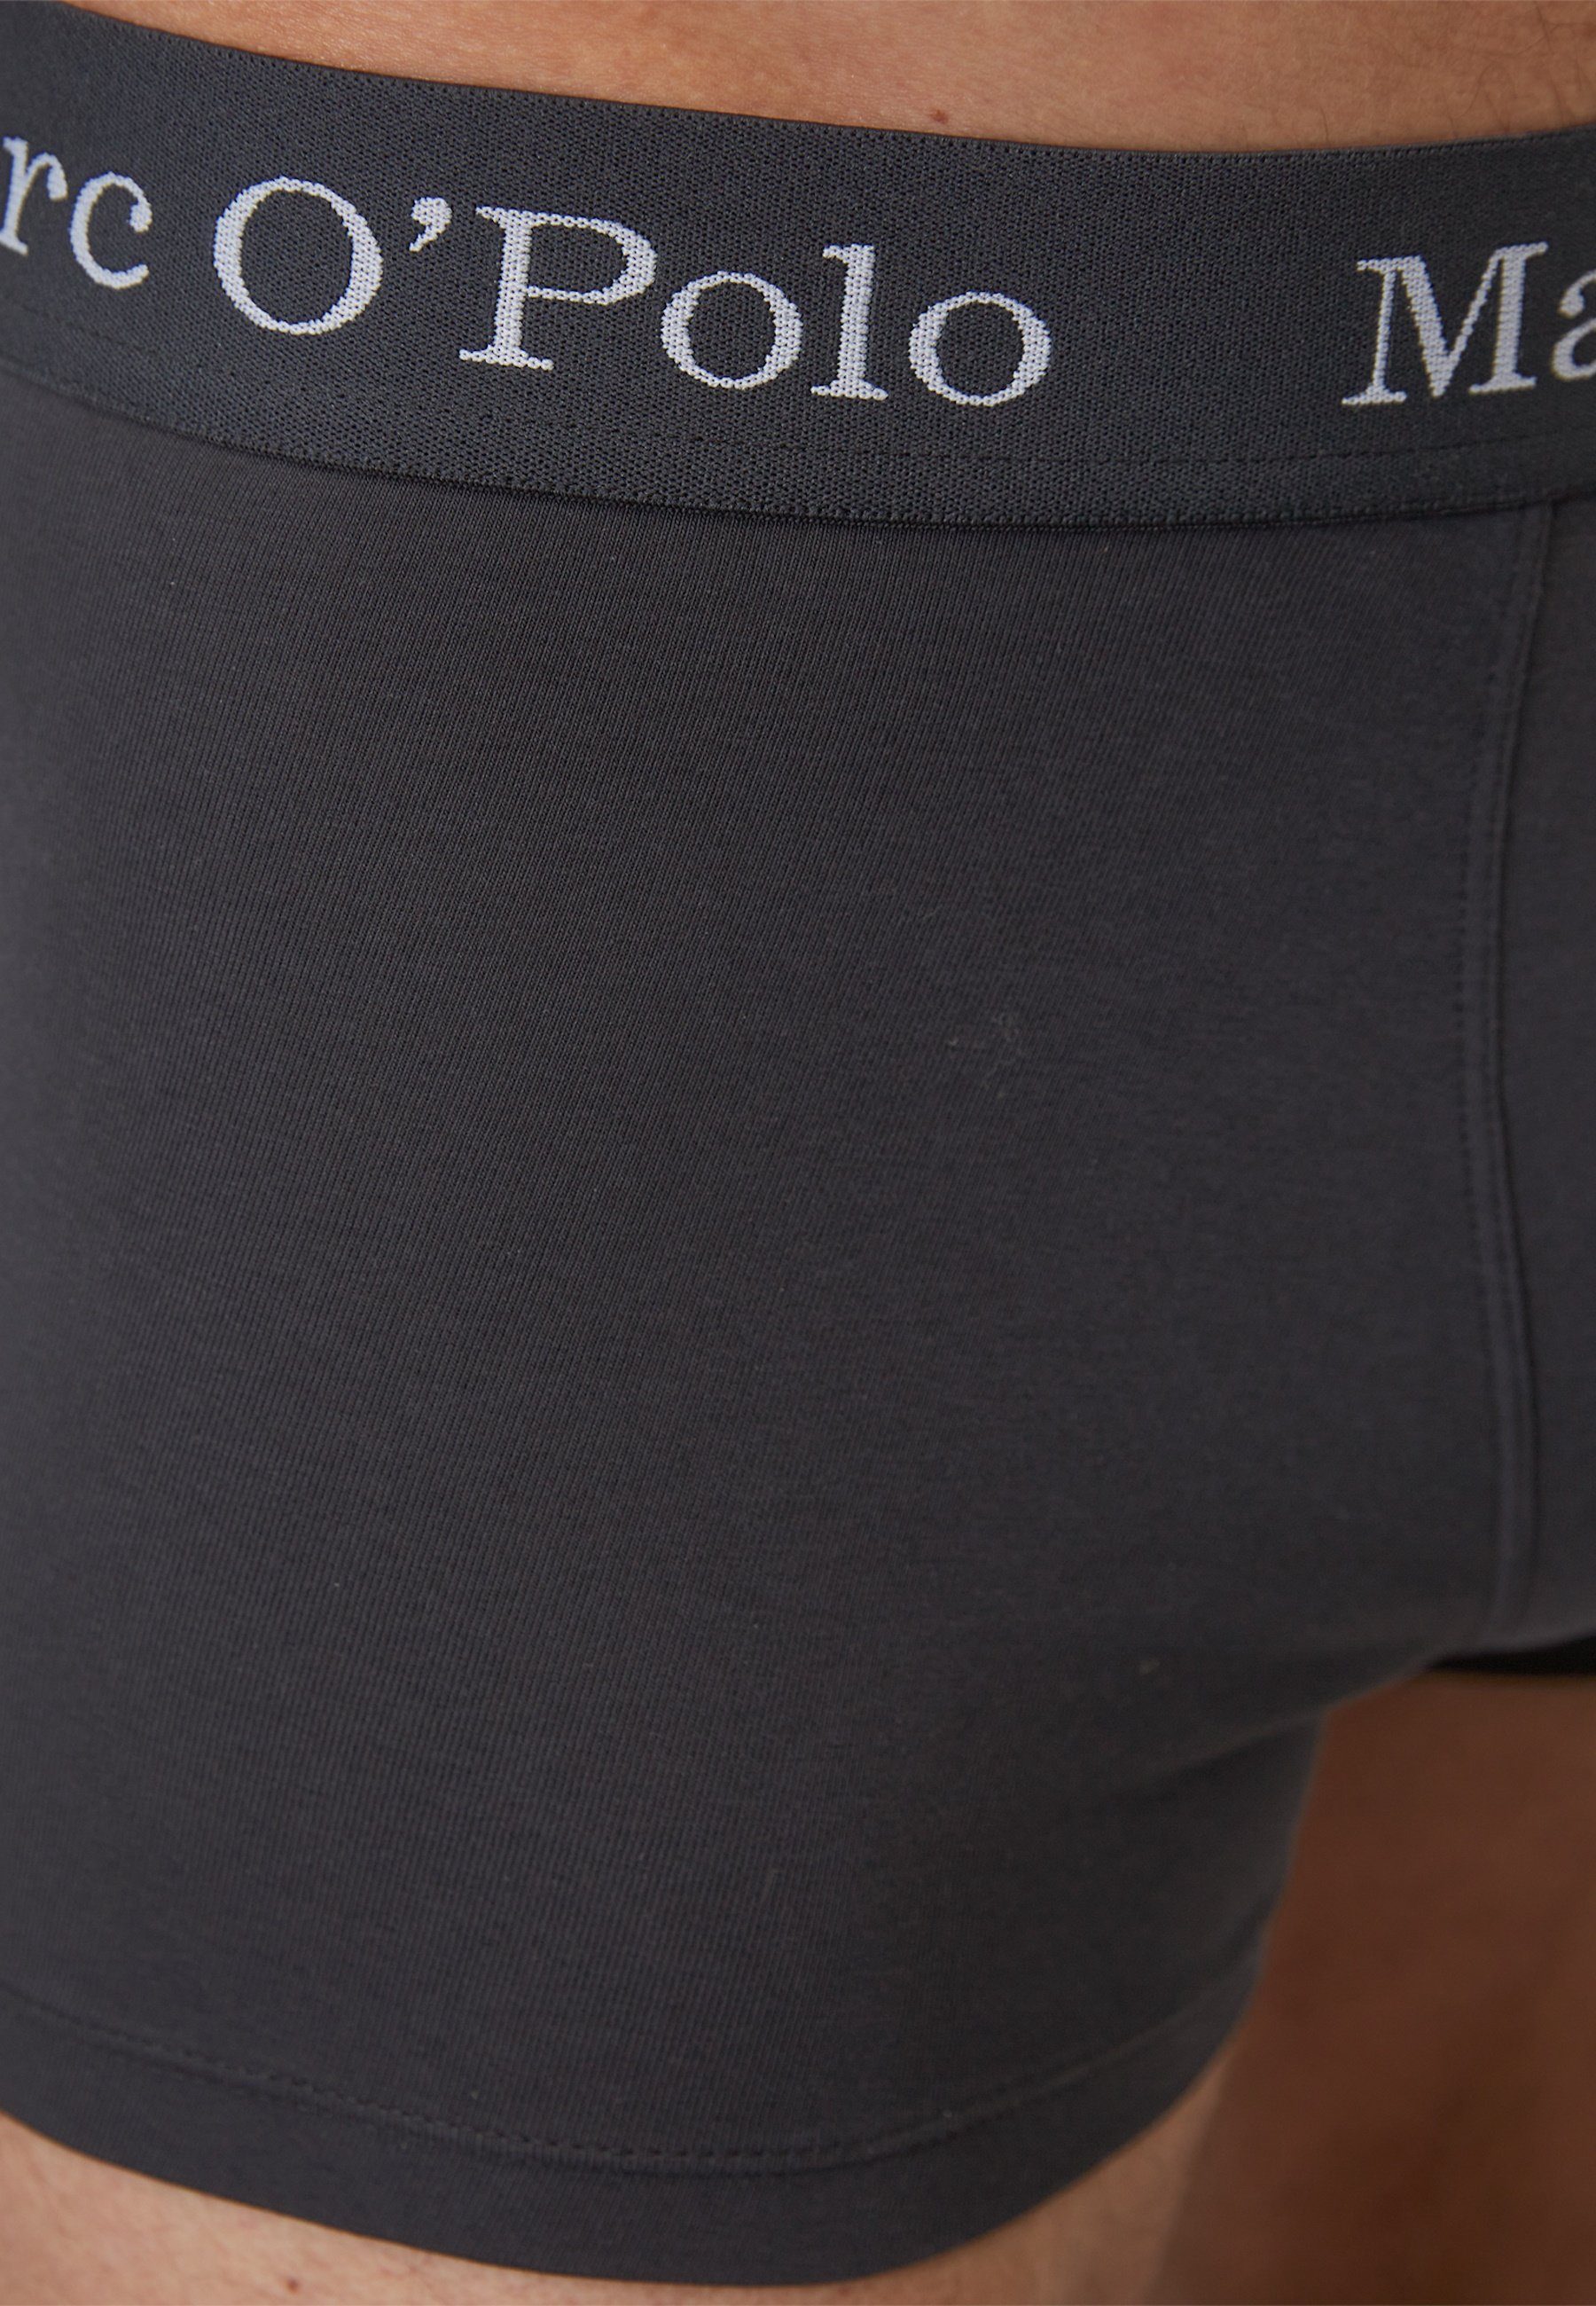 Unterhosen Dreierpack Boxershorts Boxershorts Black/Navy/Grey (3-St) Basic Marc Melange O'Polo